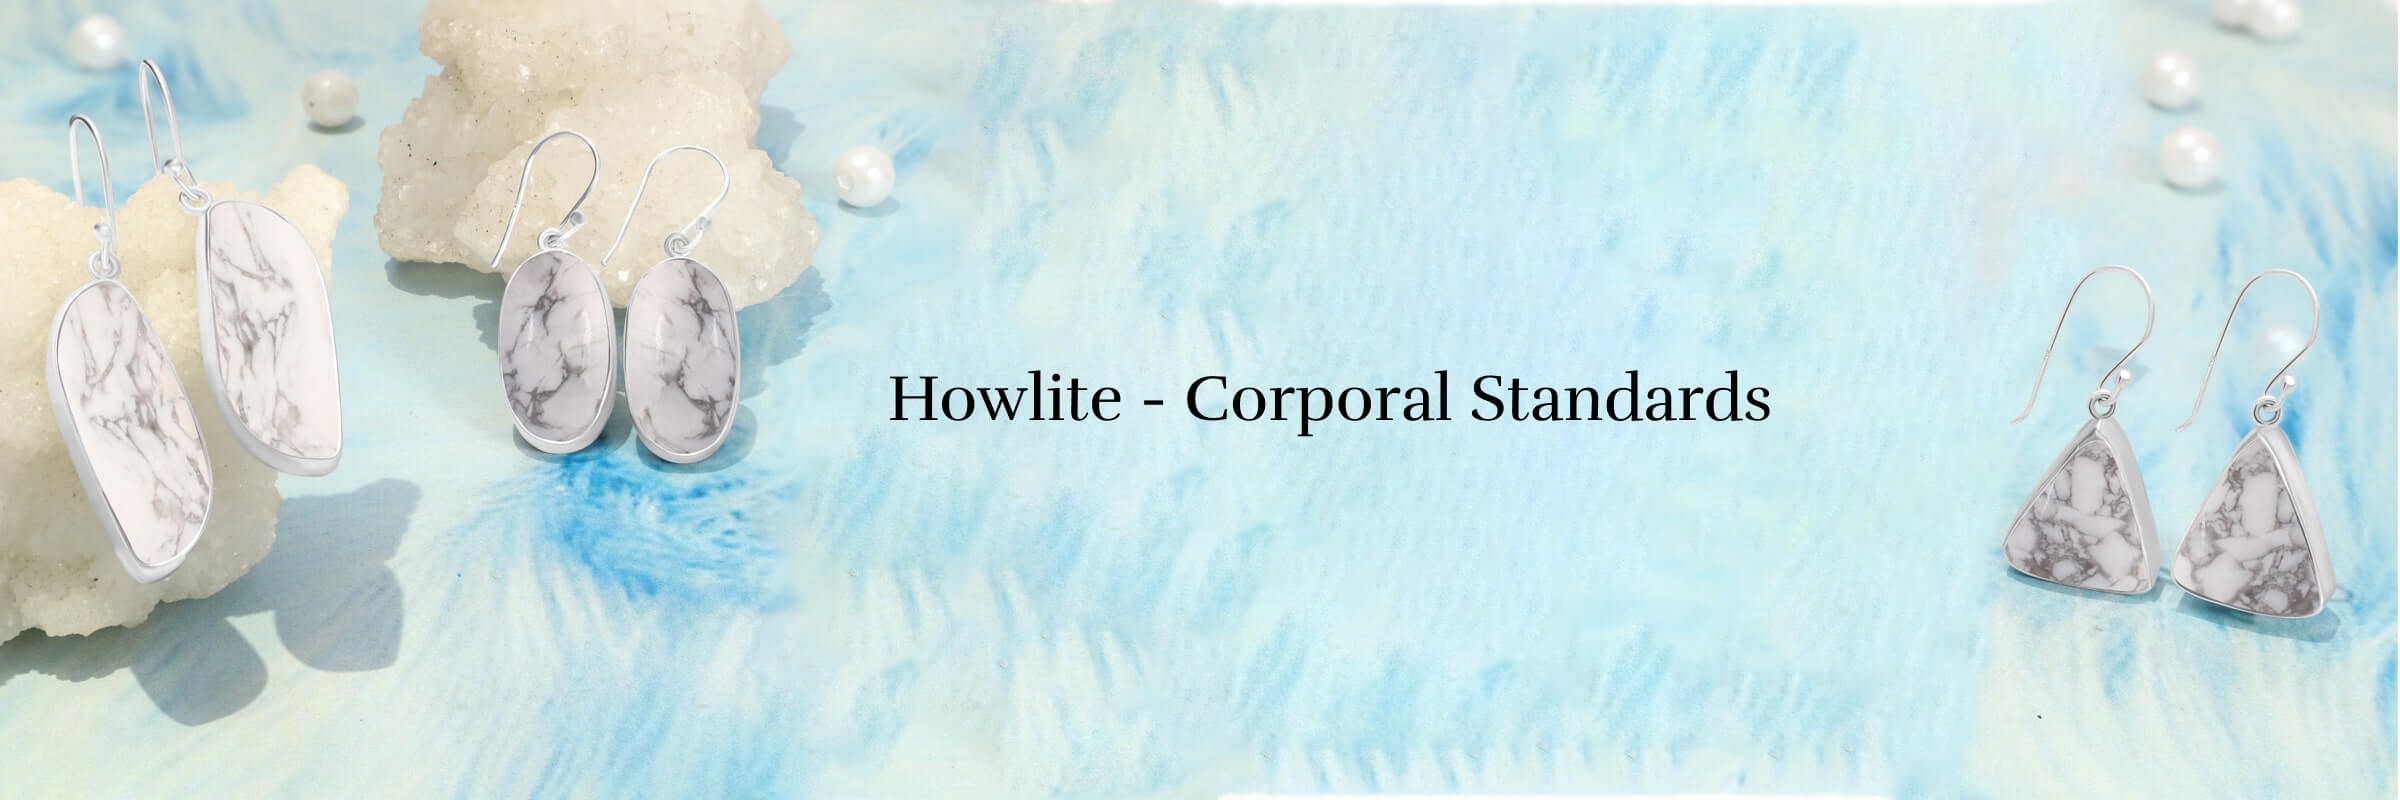 Physical Healing Properties Of Howlite